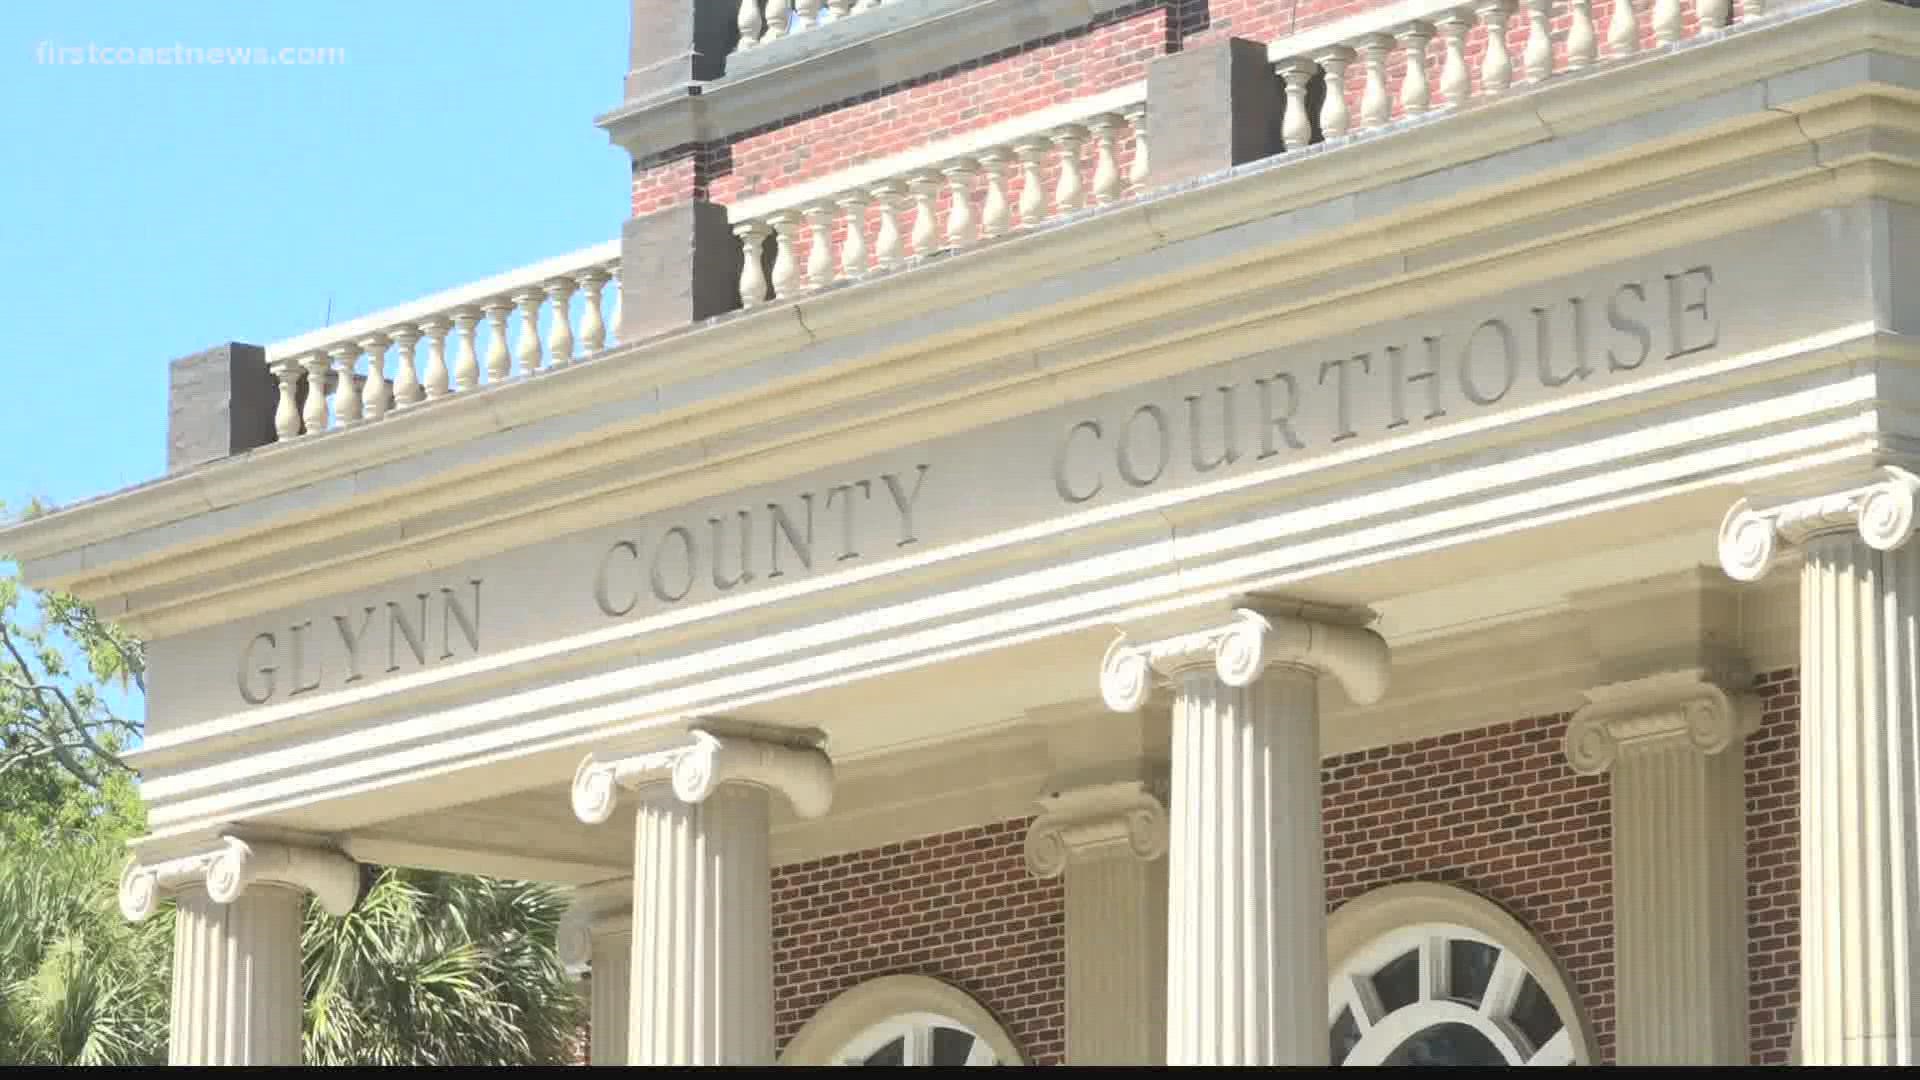 Eviction hearings begin in Glynn County